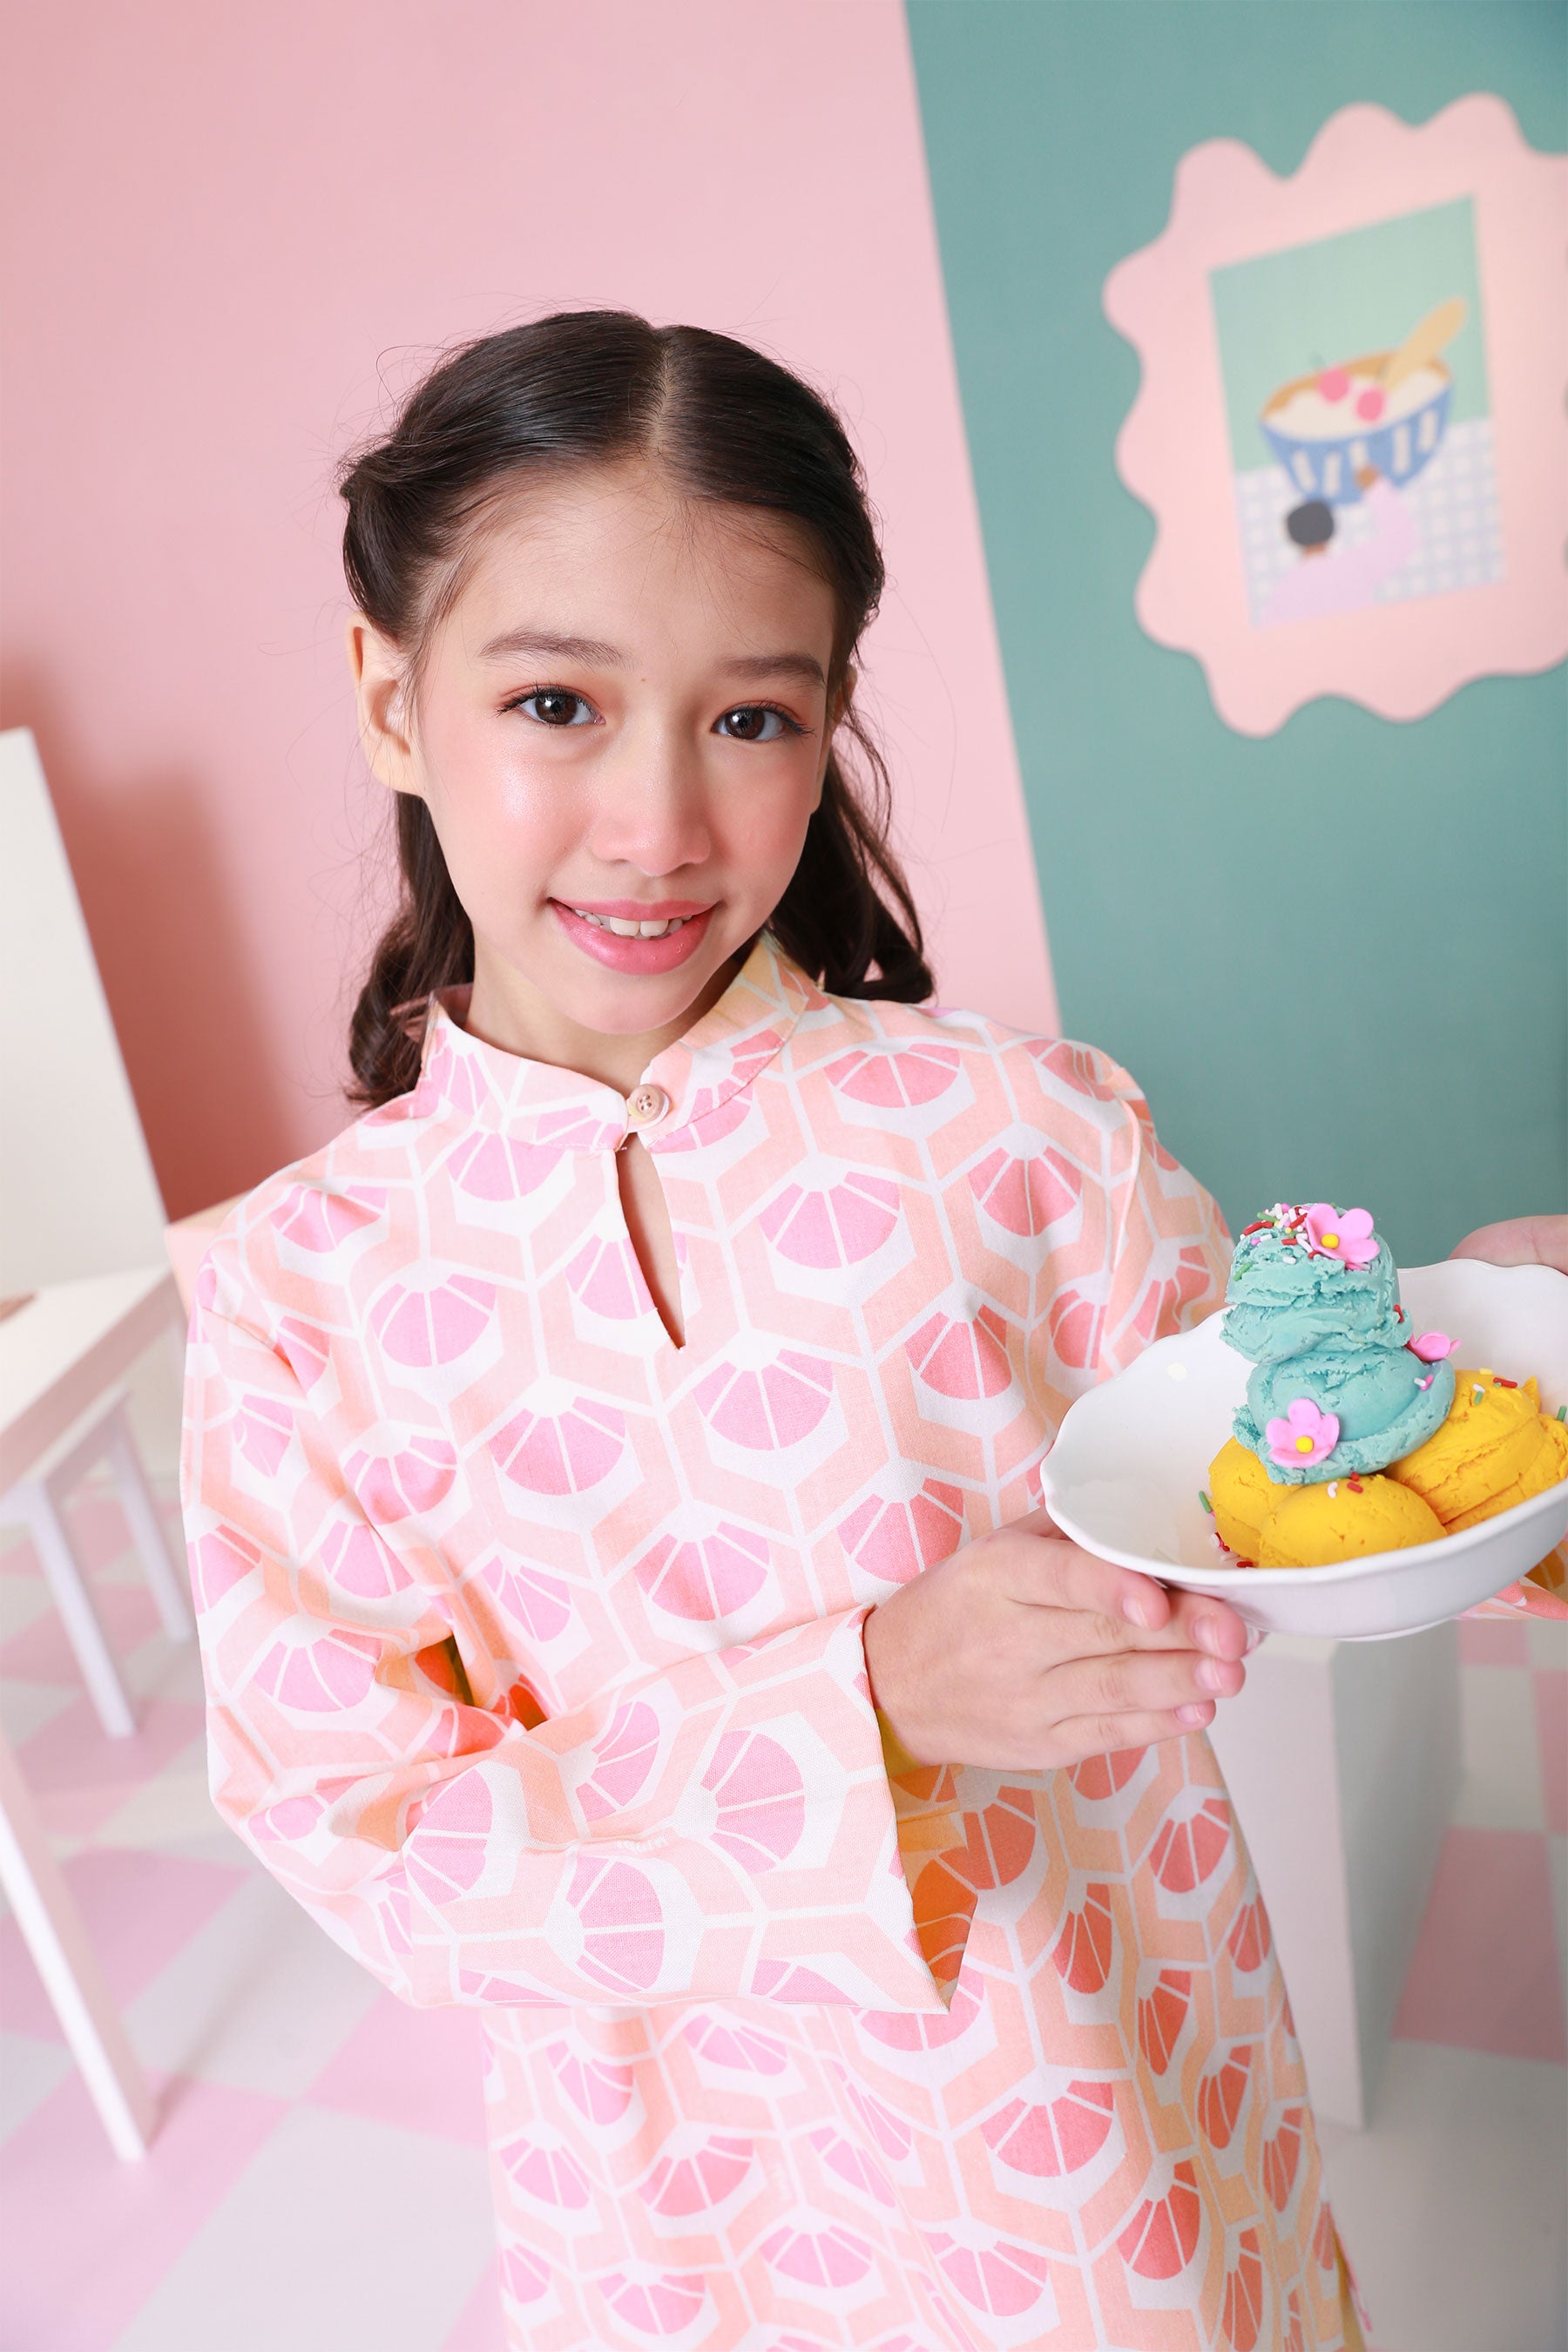  girl printed cupcake match with blush skirt